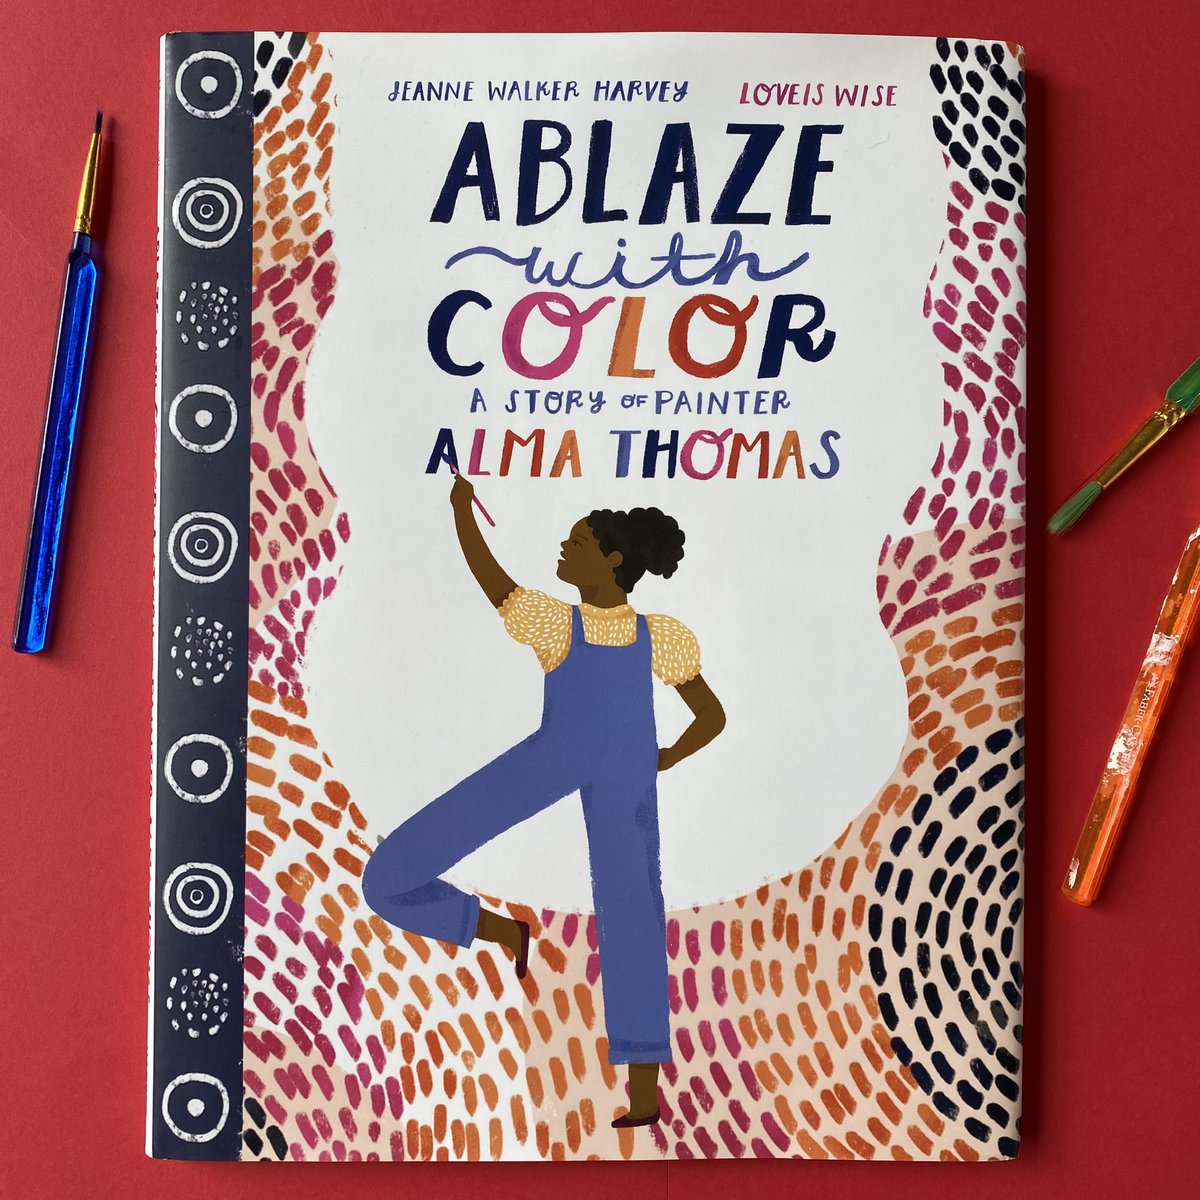 The world needs to be ablaze with color 🎨 #kidslit #picturebooks #almathomas @JeanneWHarvey @LoveisWise_ @HarperChildrens @blueslipper @barbfisch